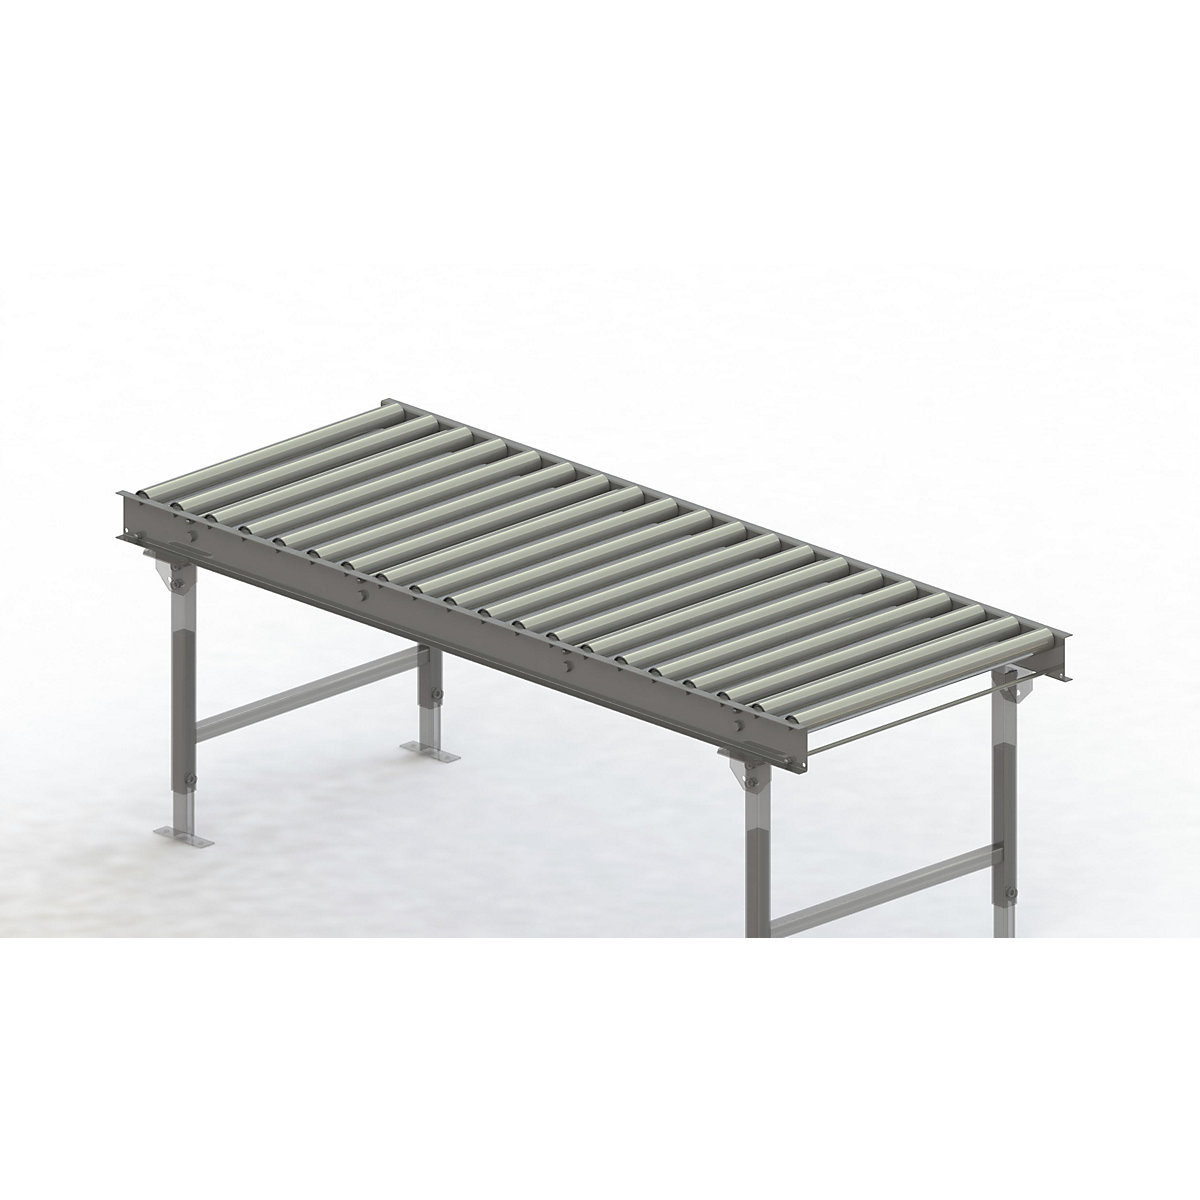 Gura – Roller conveyor, steel frame with zinc plated steel rollers, track width 750 mm, distance between axles 100 mm, length 2 m